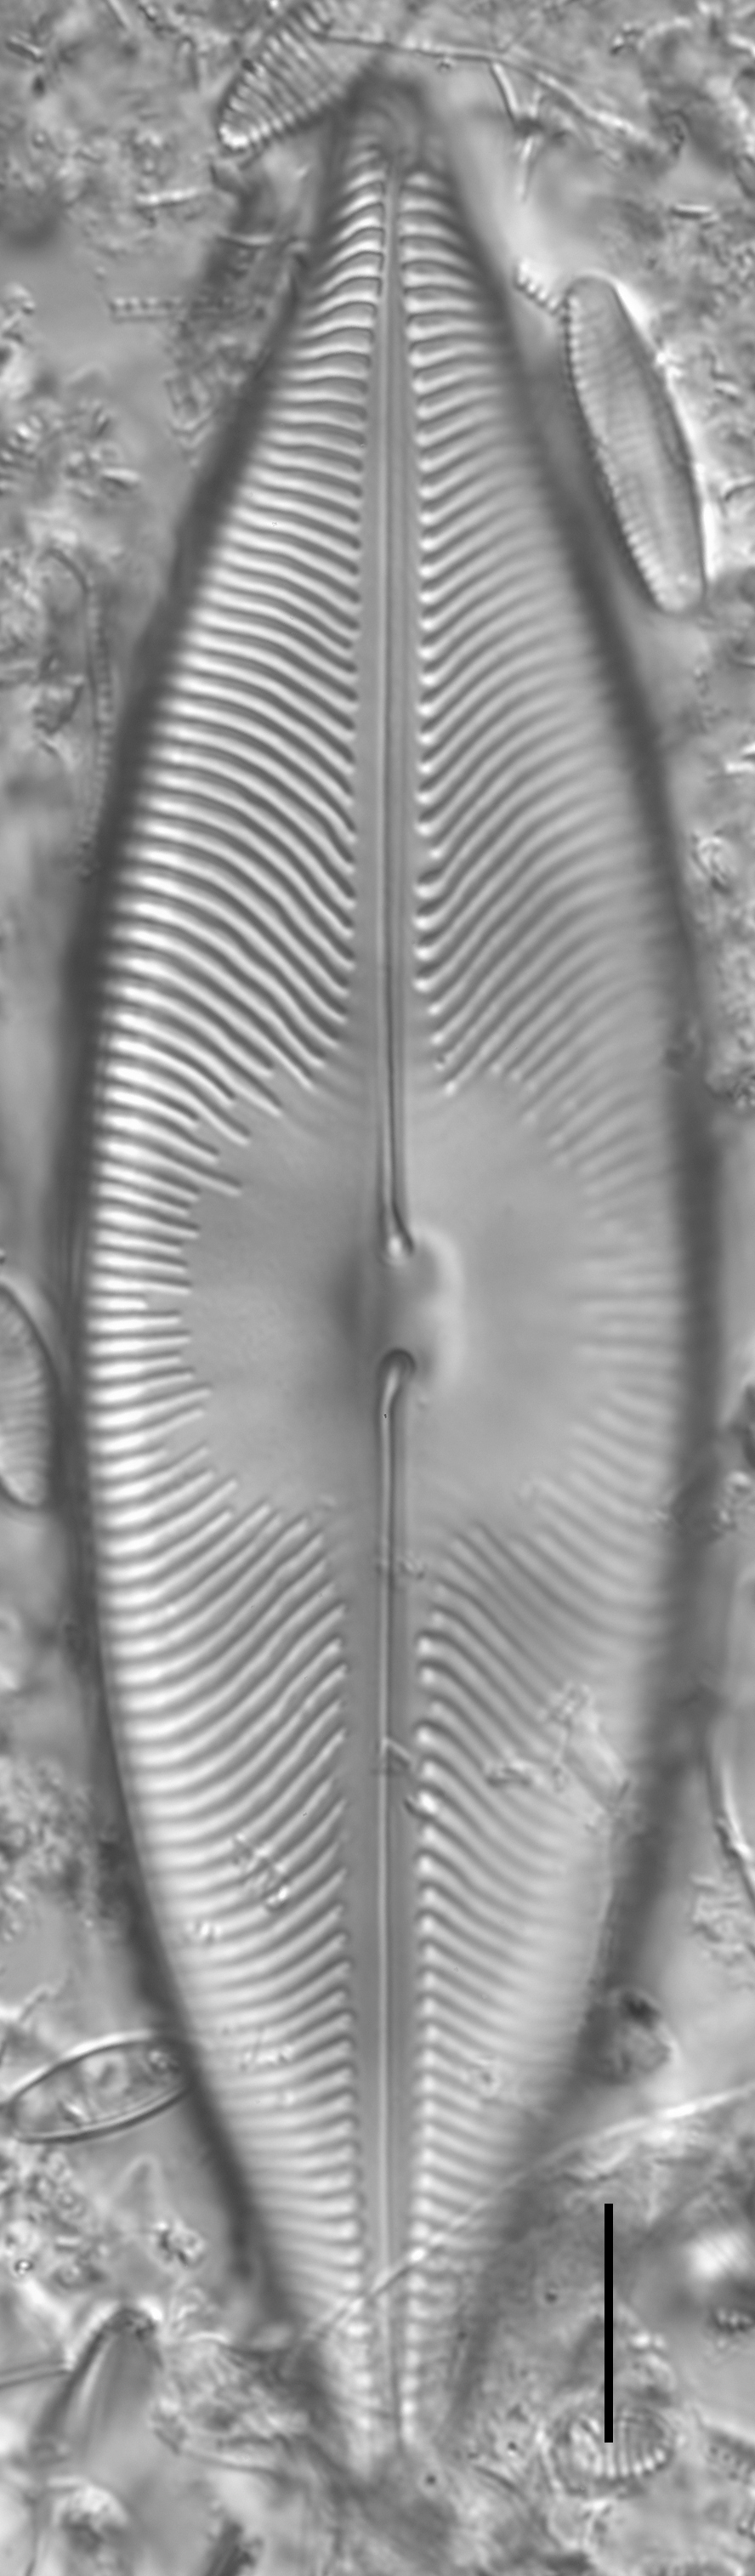 Pinnunavis elegans LM3